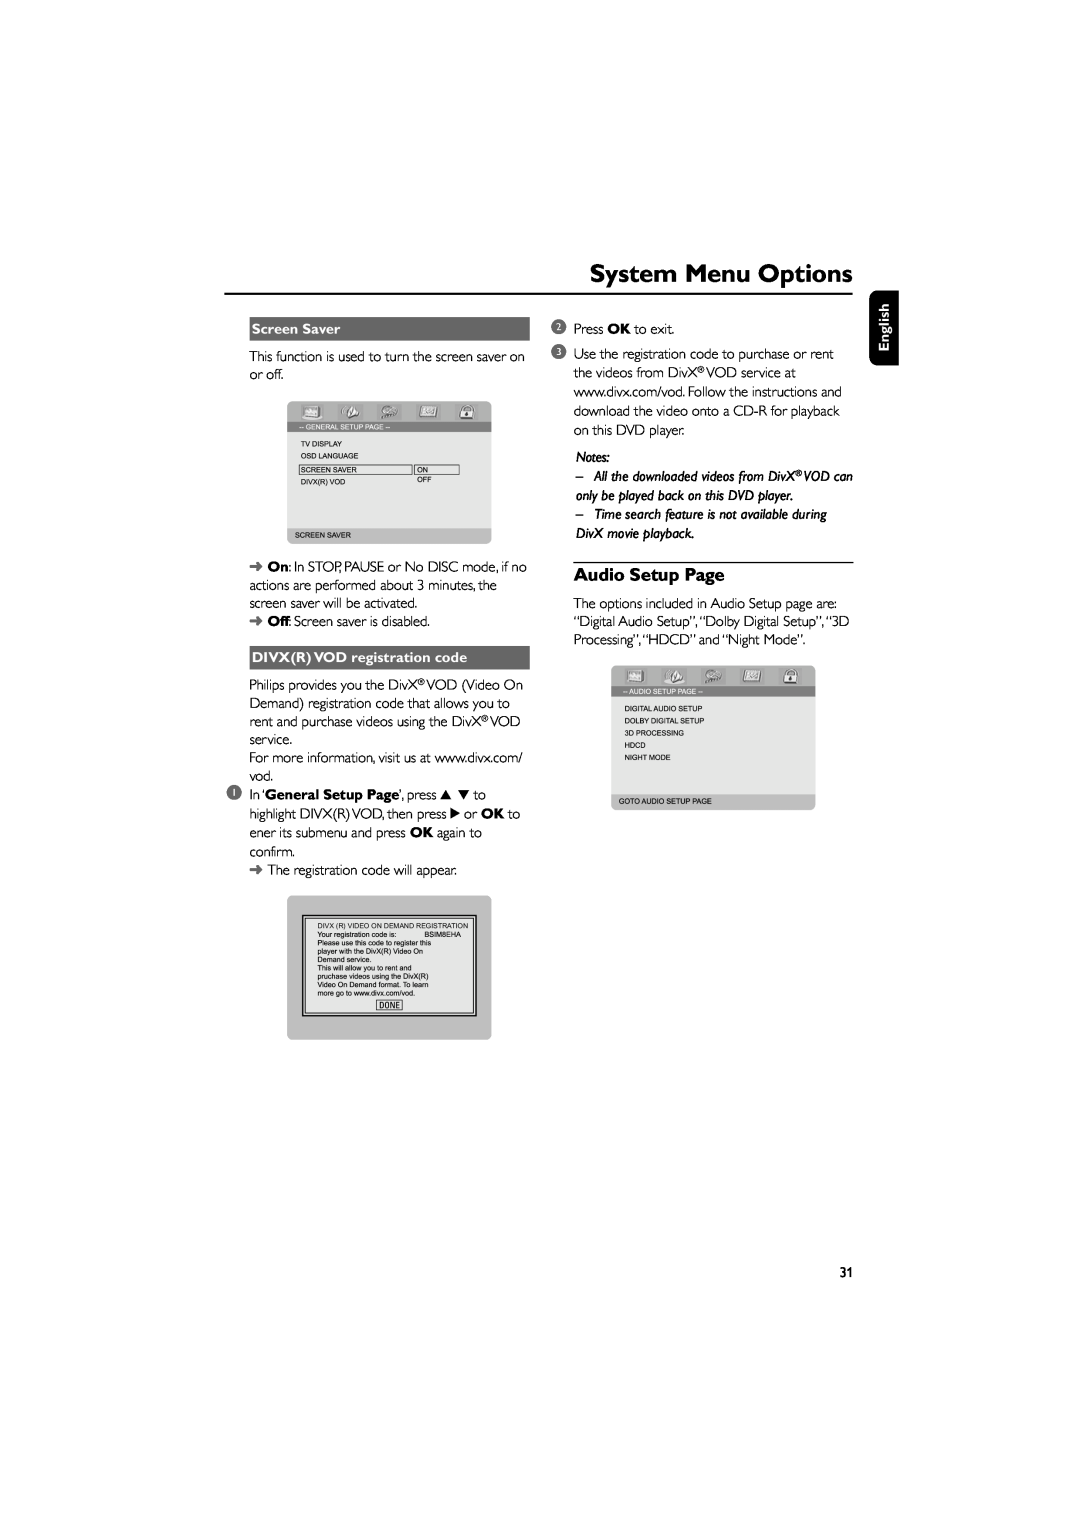 Philips MCD709 user manual Audio Setup Page, Screen Saver, DIVXR VOD registration code, System Menu Options, English 